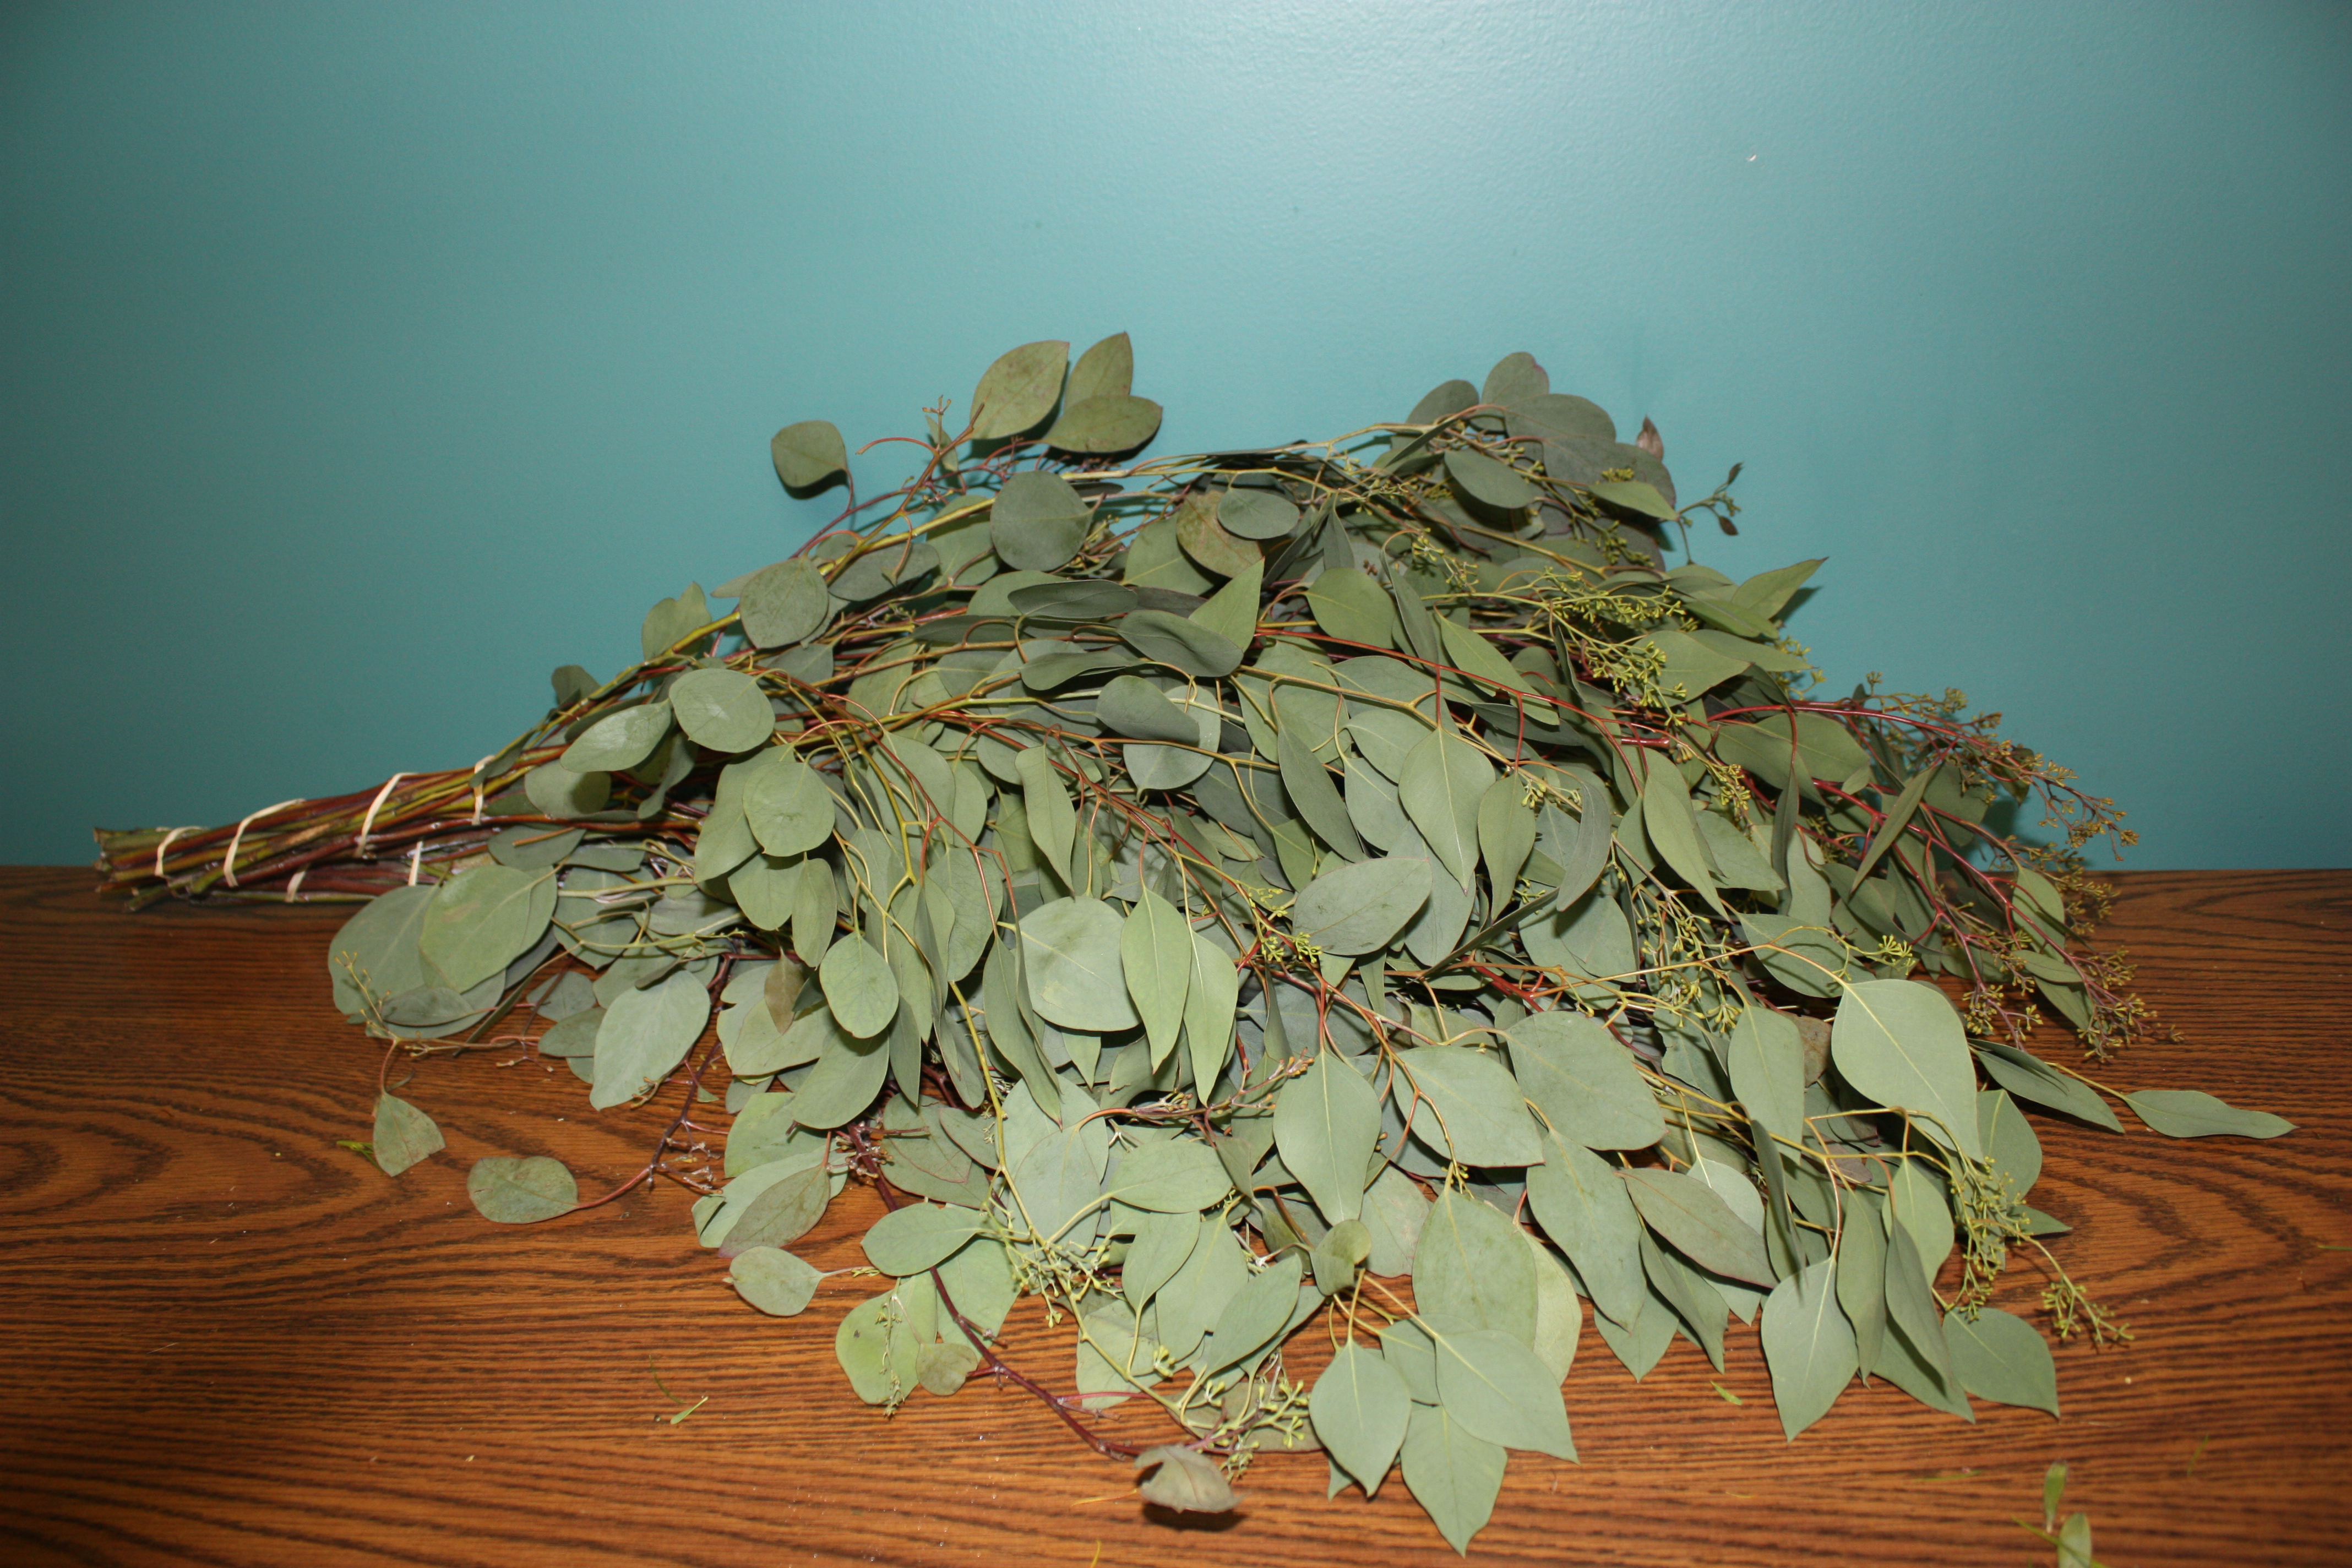 Eucalyptus Varieties